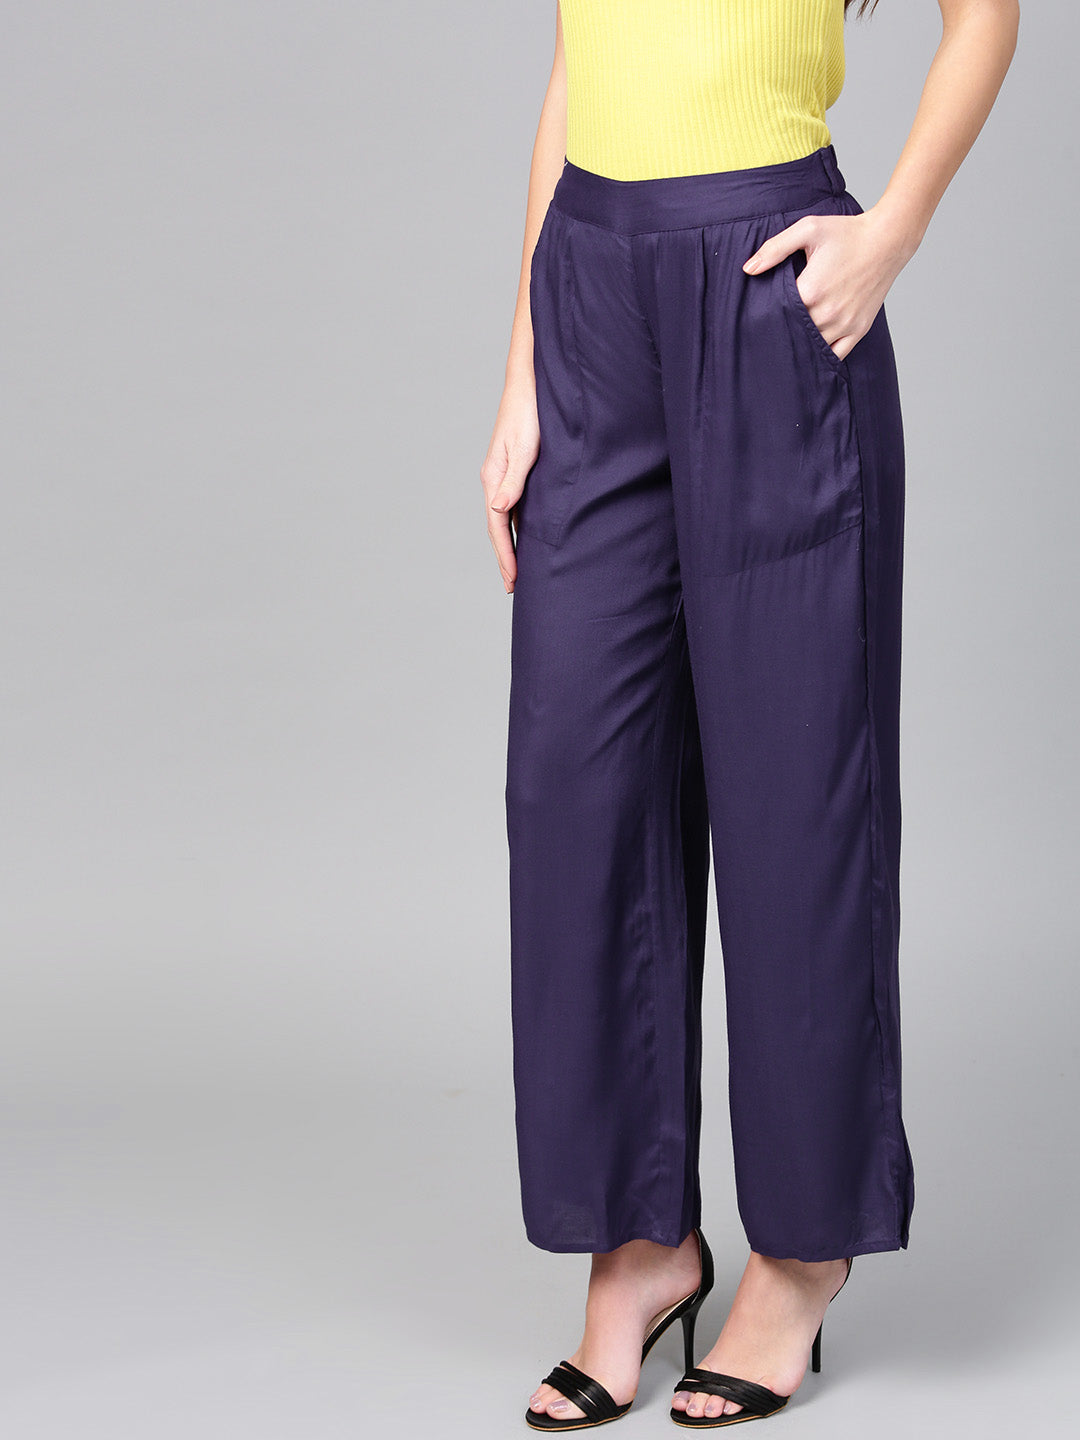 Purple Rayon Formal Palazzo Pants with Pockets